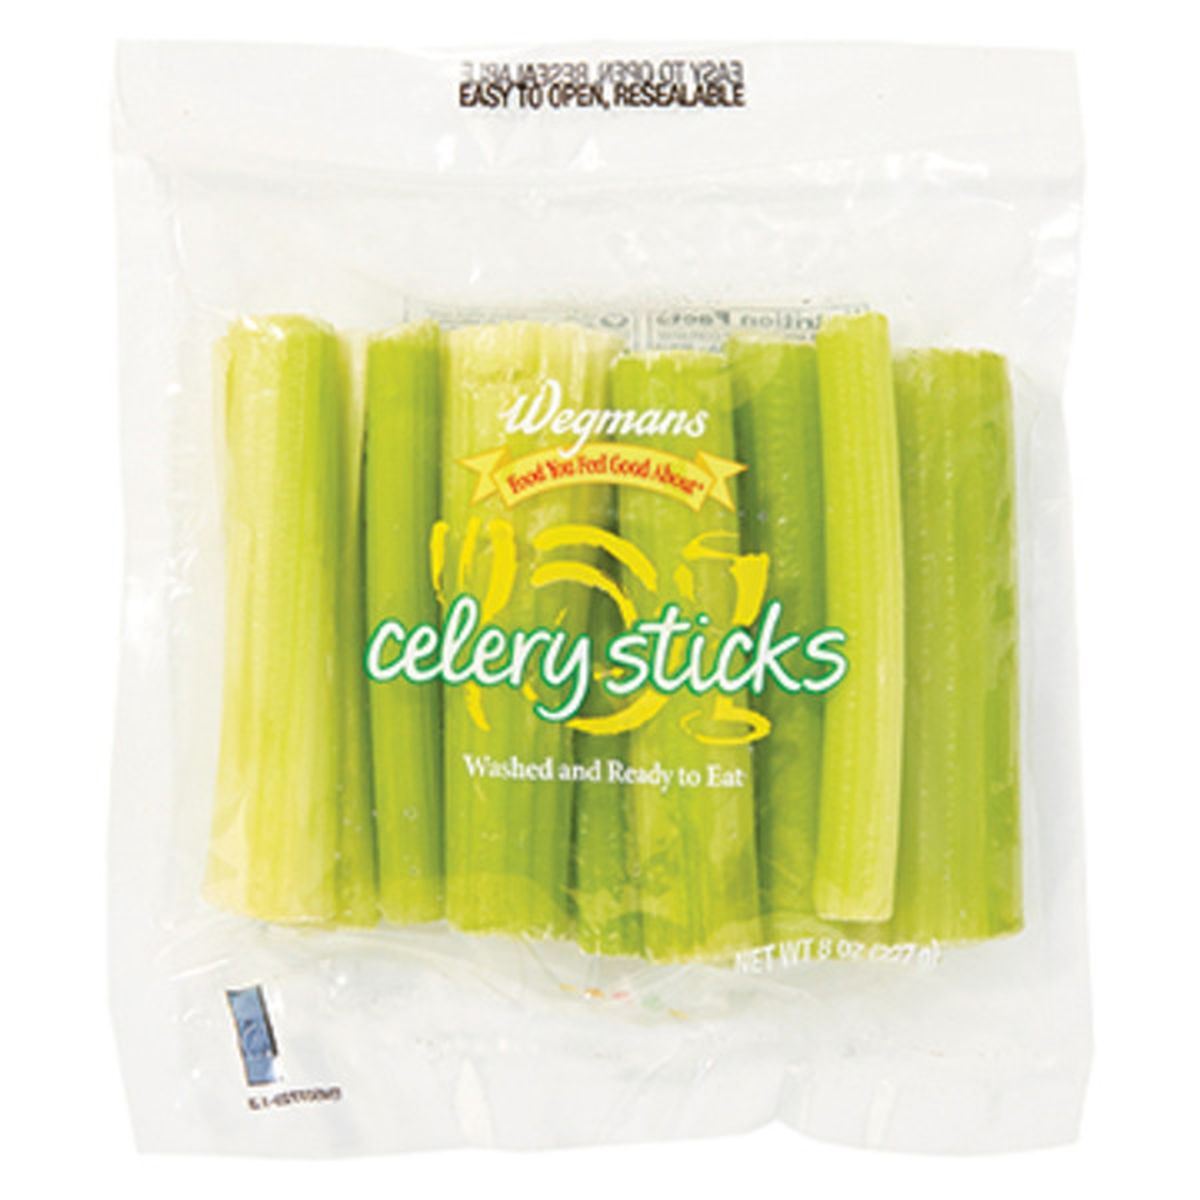 Calories in Wegmans Celery Sticks